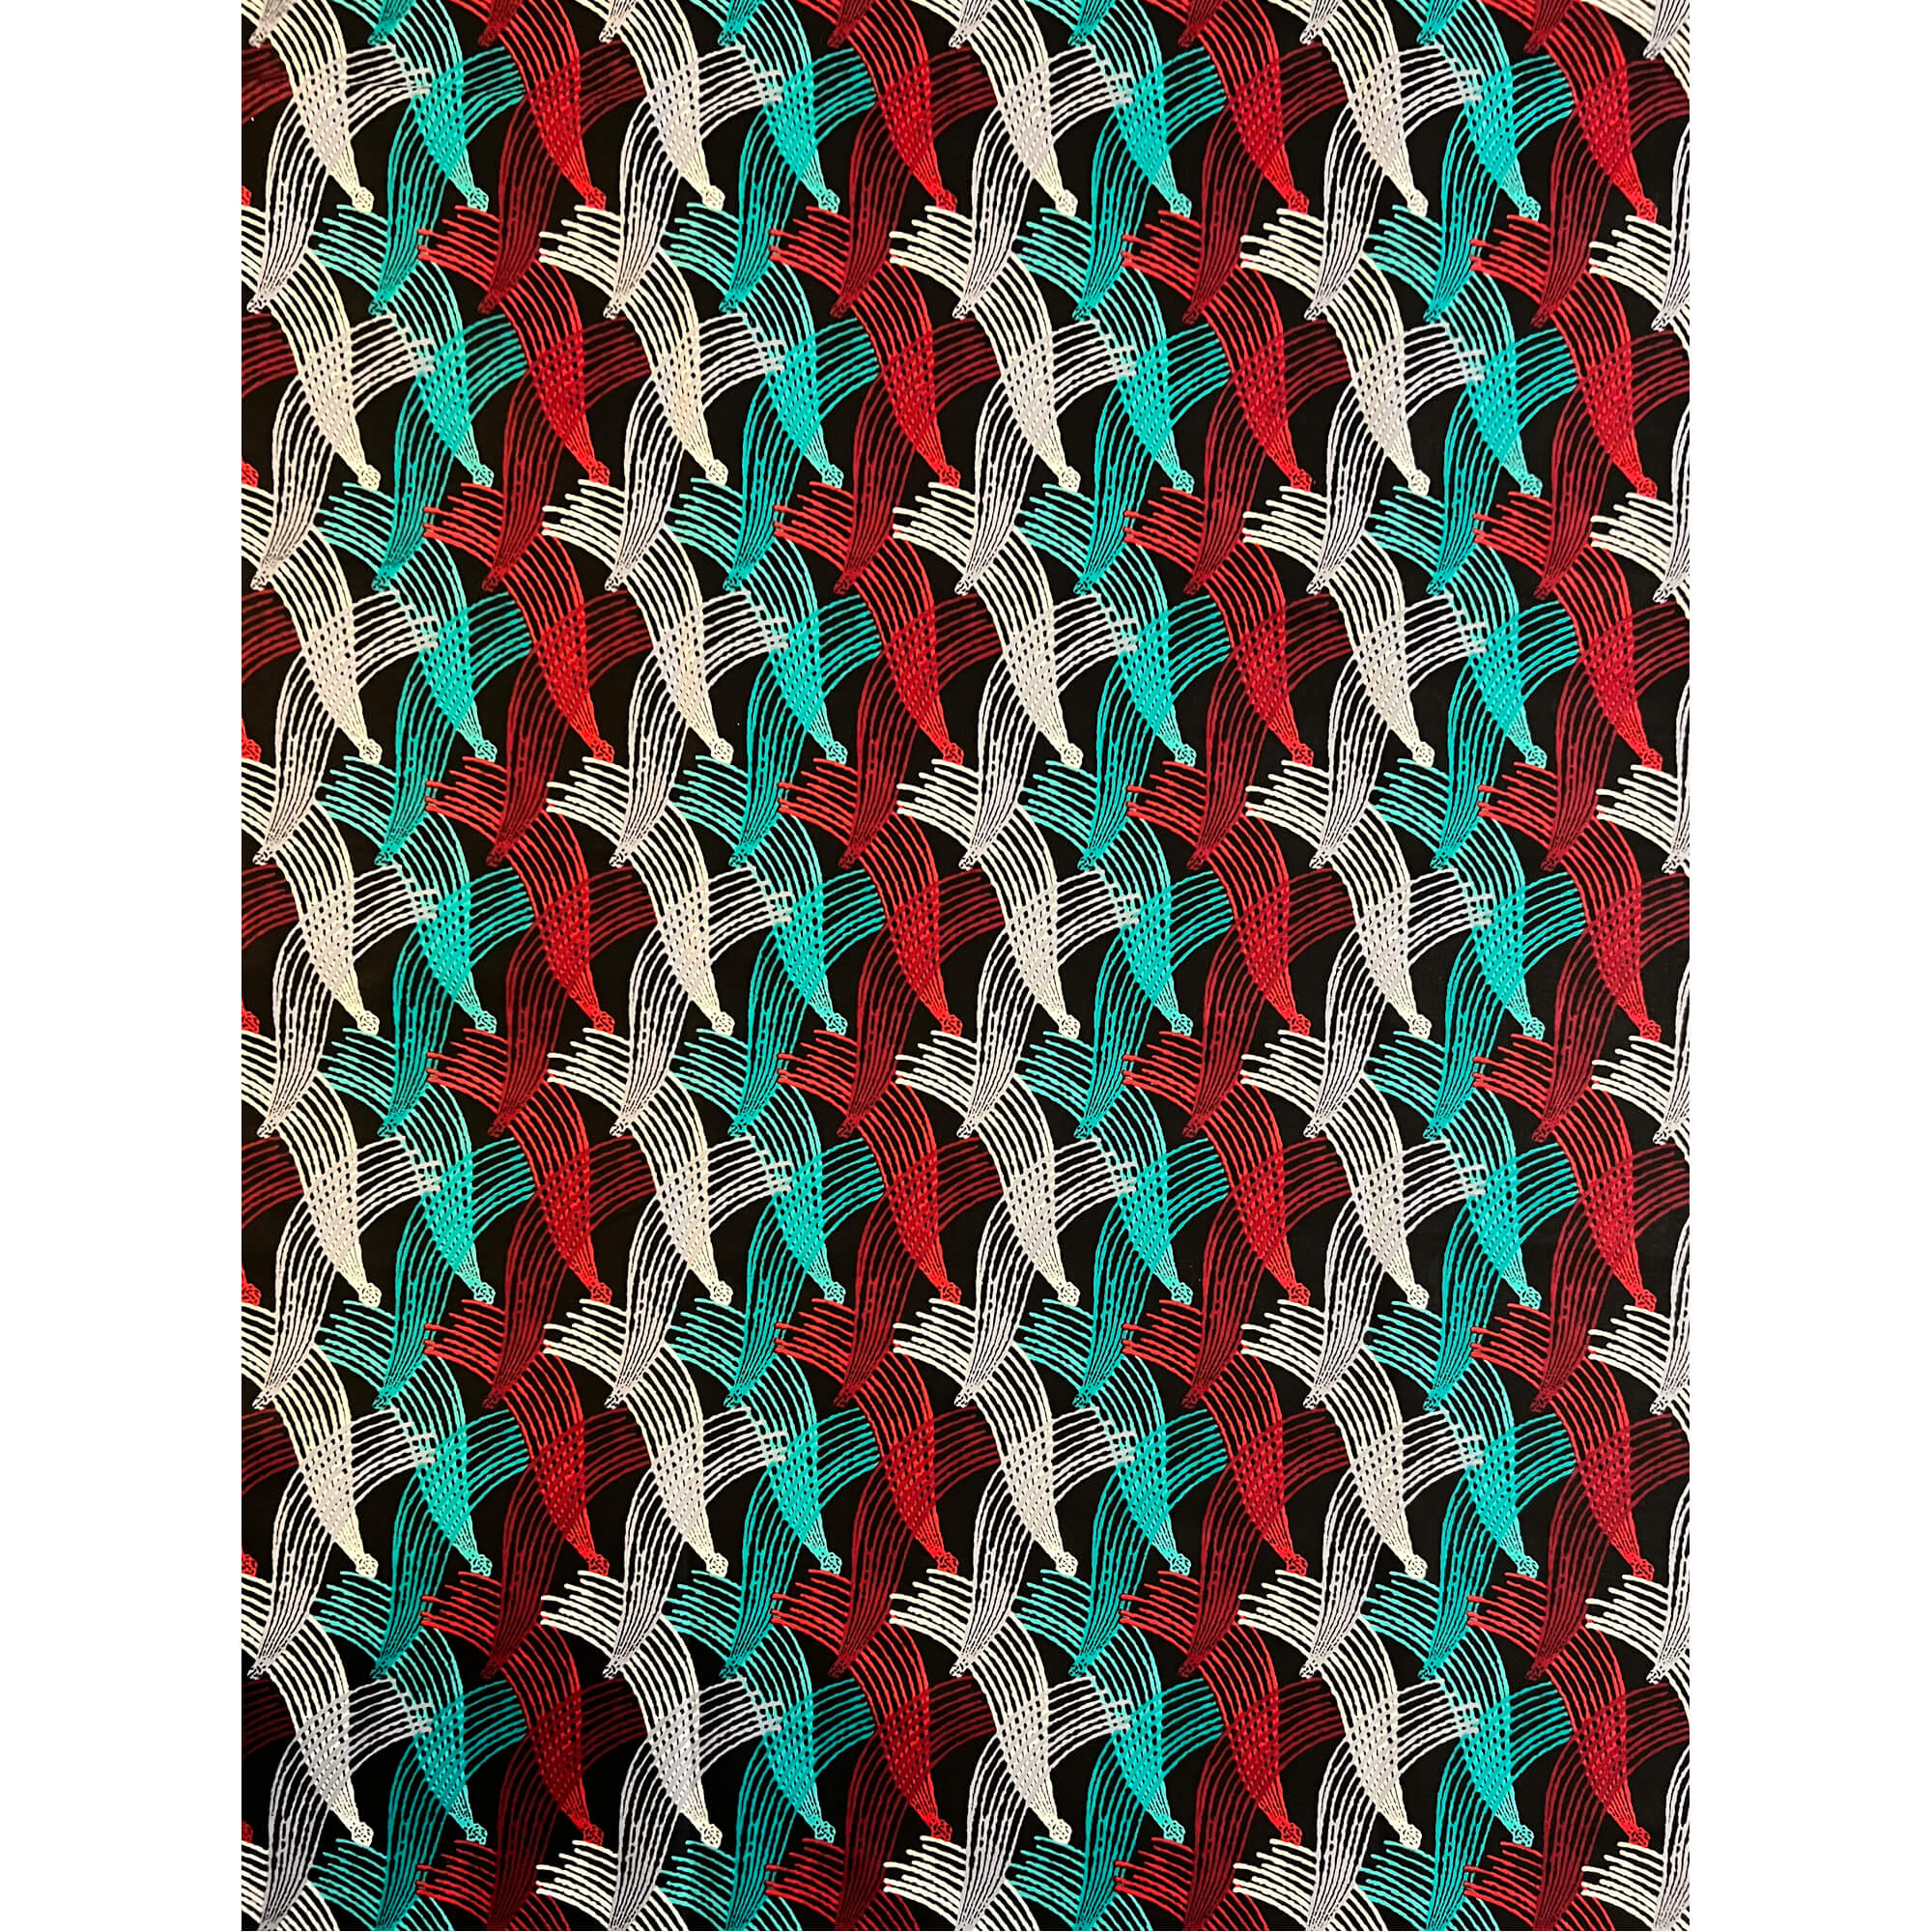 Tissu - Wax 100% coton - Graphiques - Turquoise / Blanc / Rouge